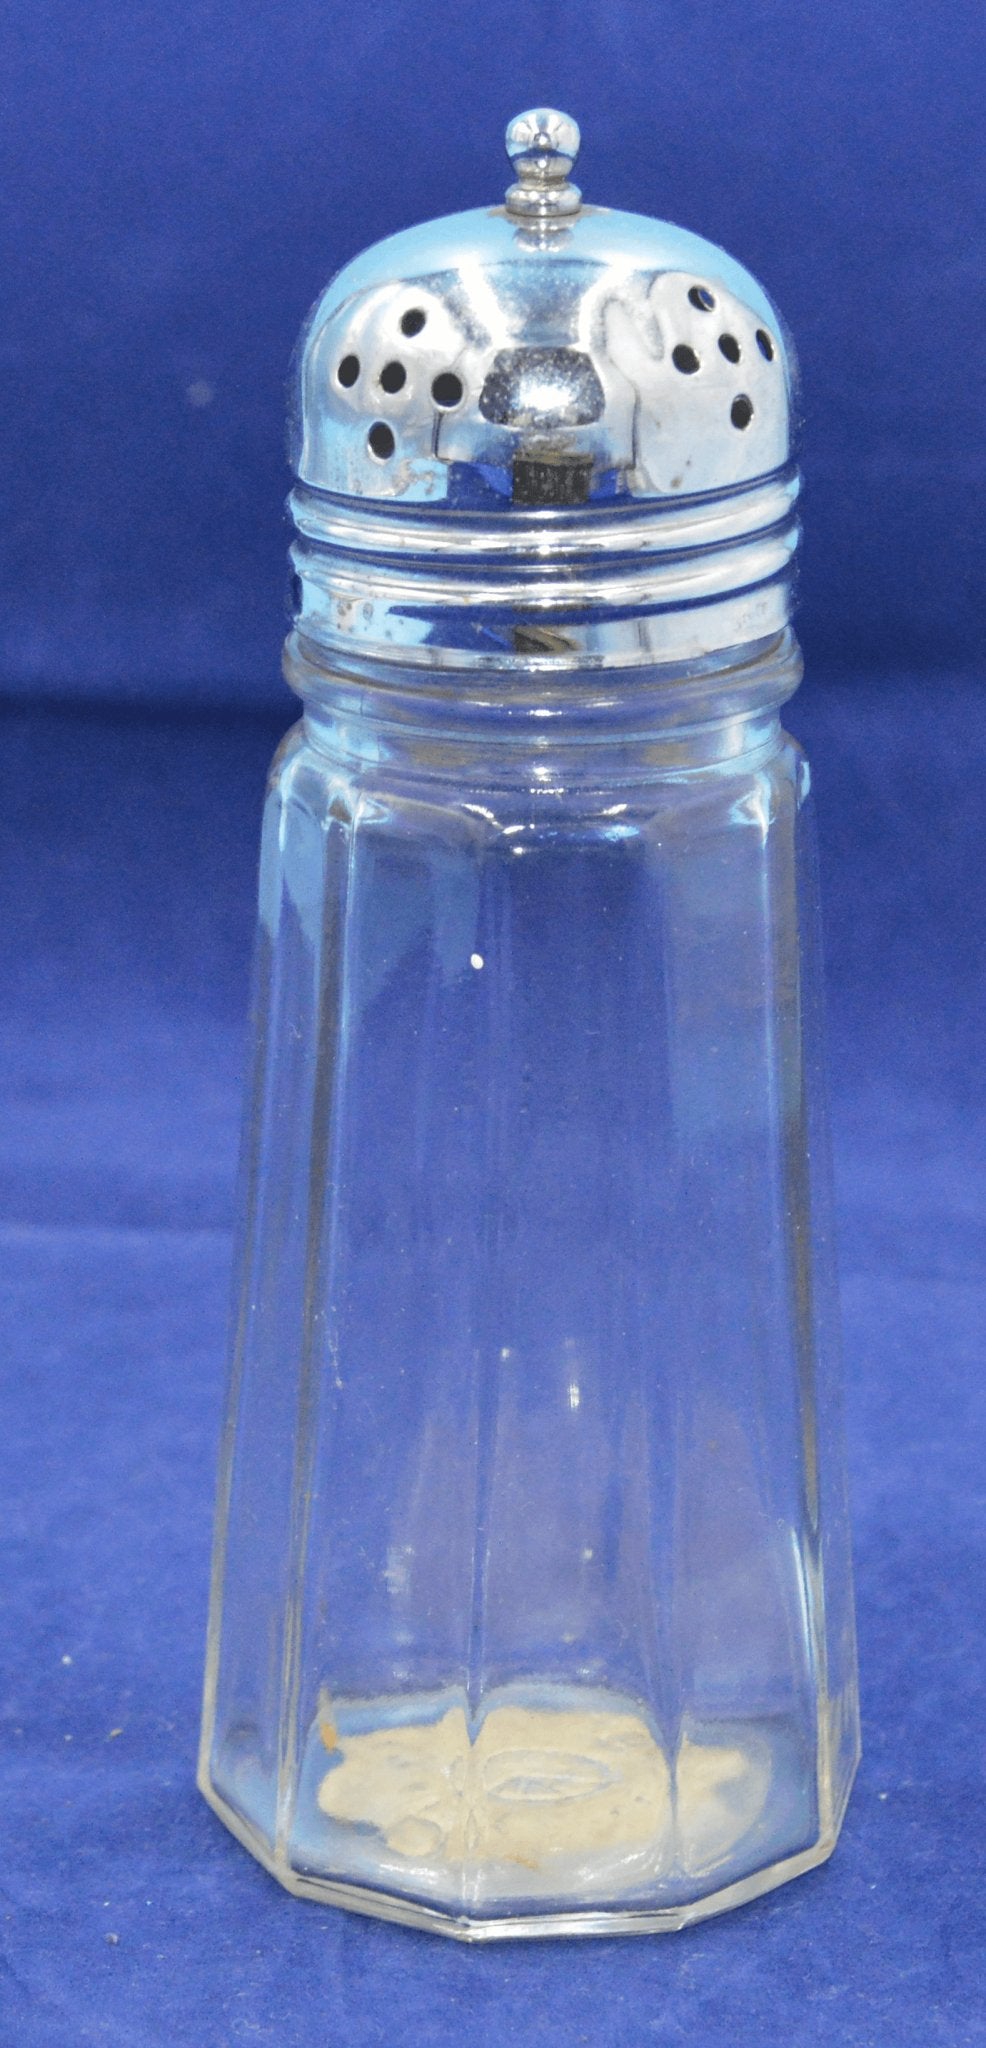 TABLEWARE GLASS AND STAINLESS STEEL PEPPER POTSHAKER - TMD167207